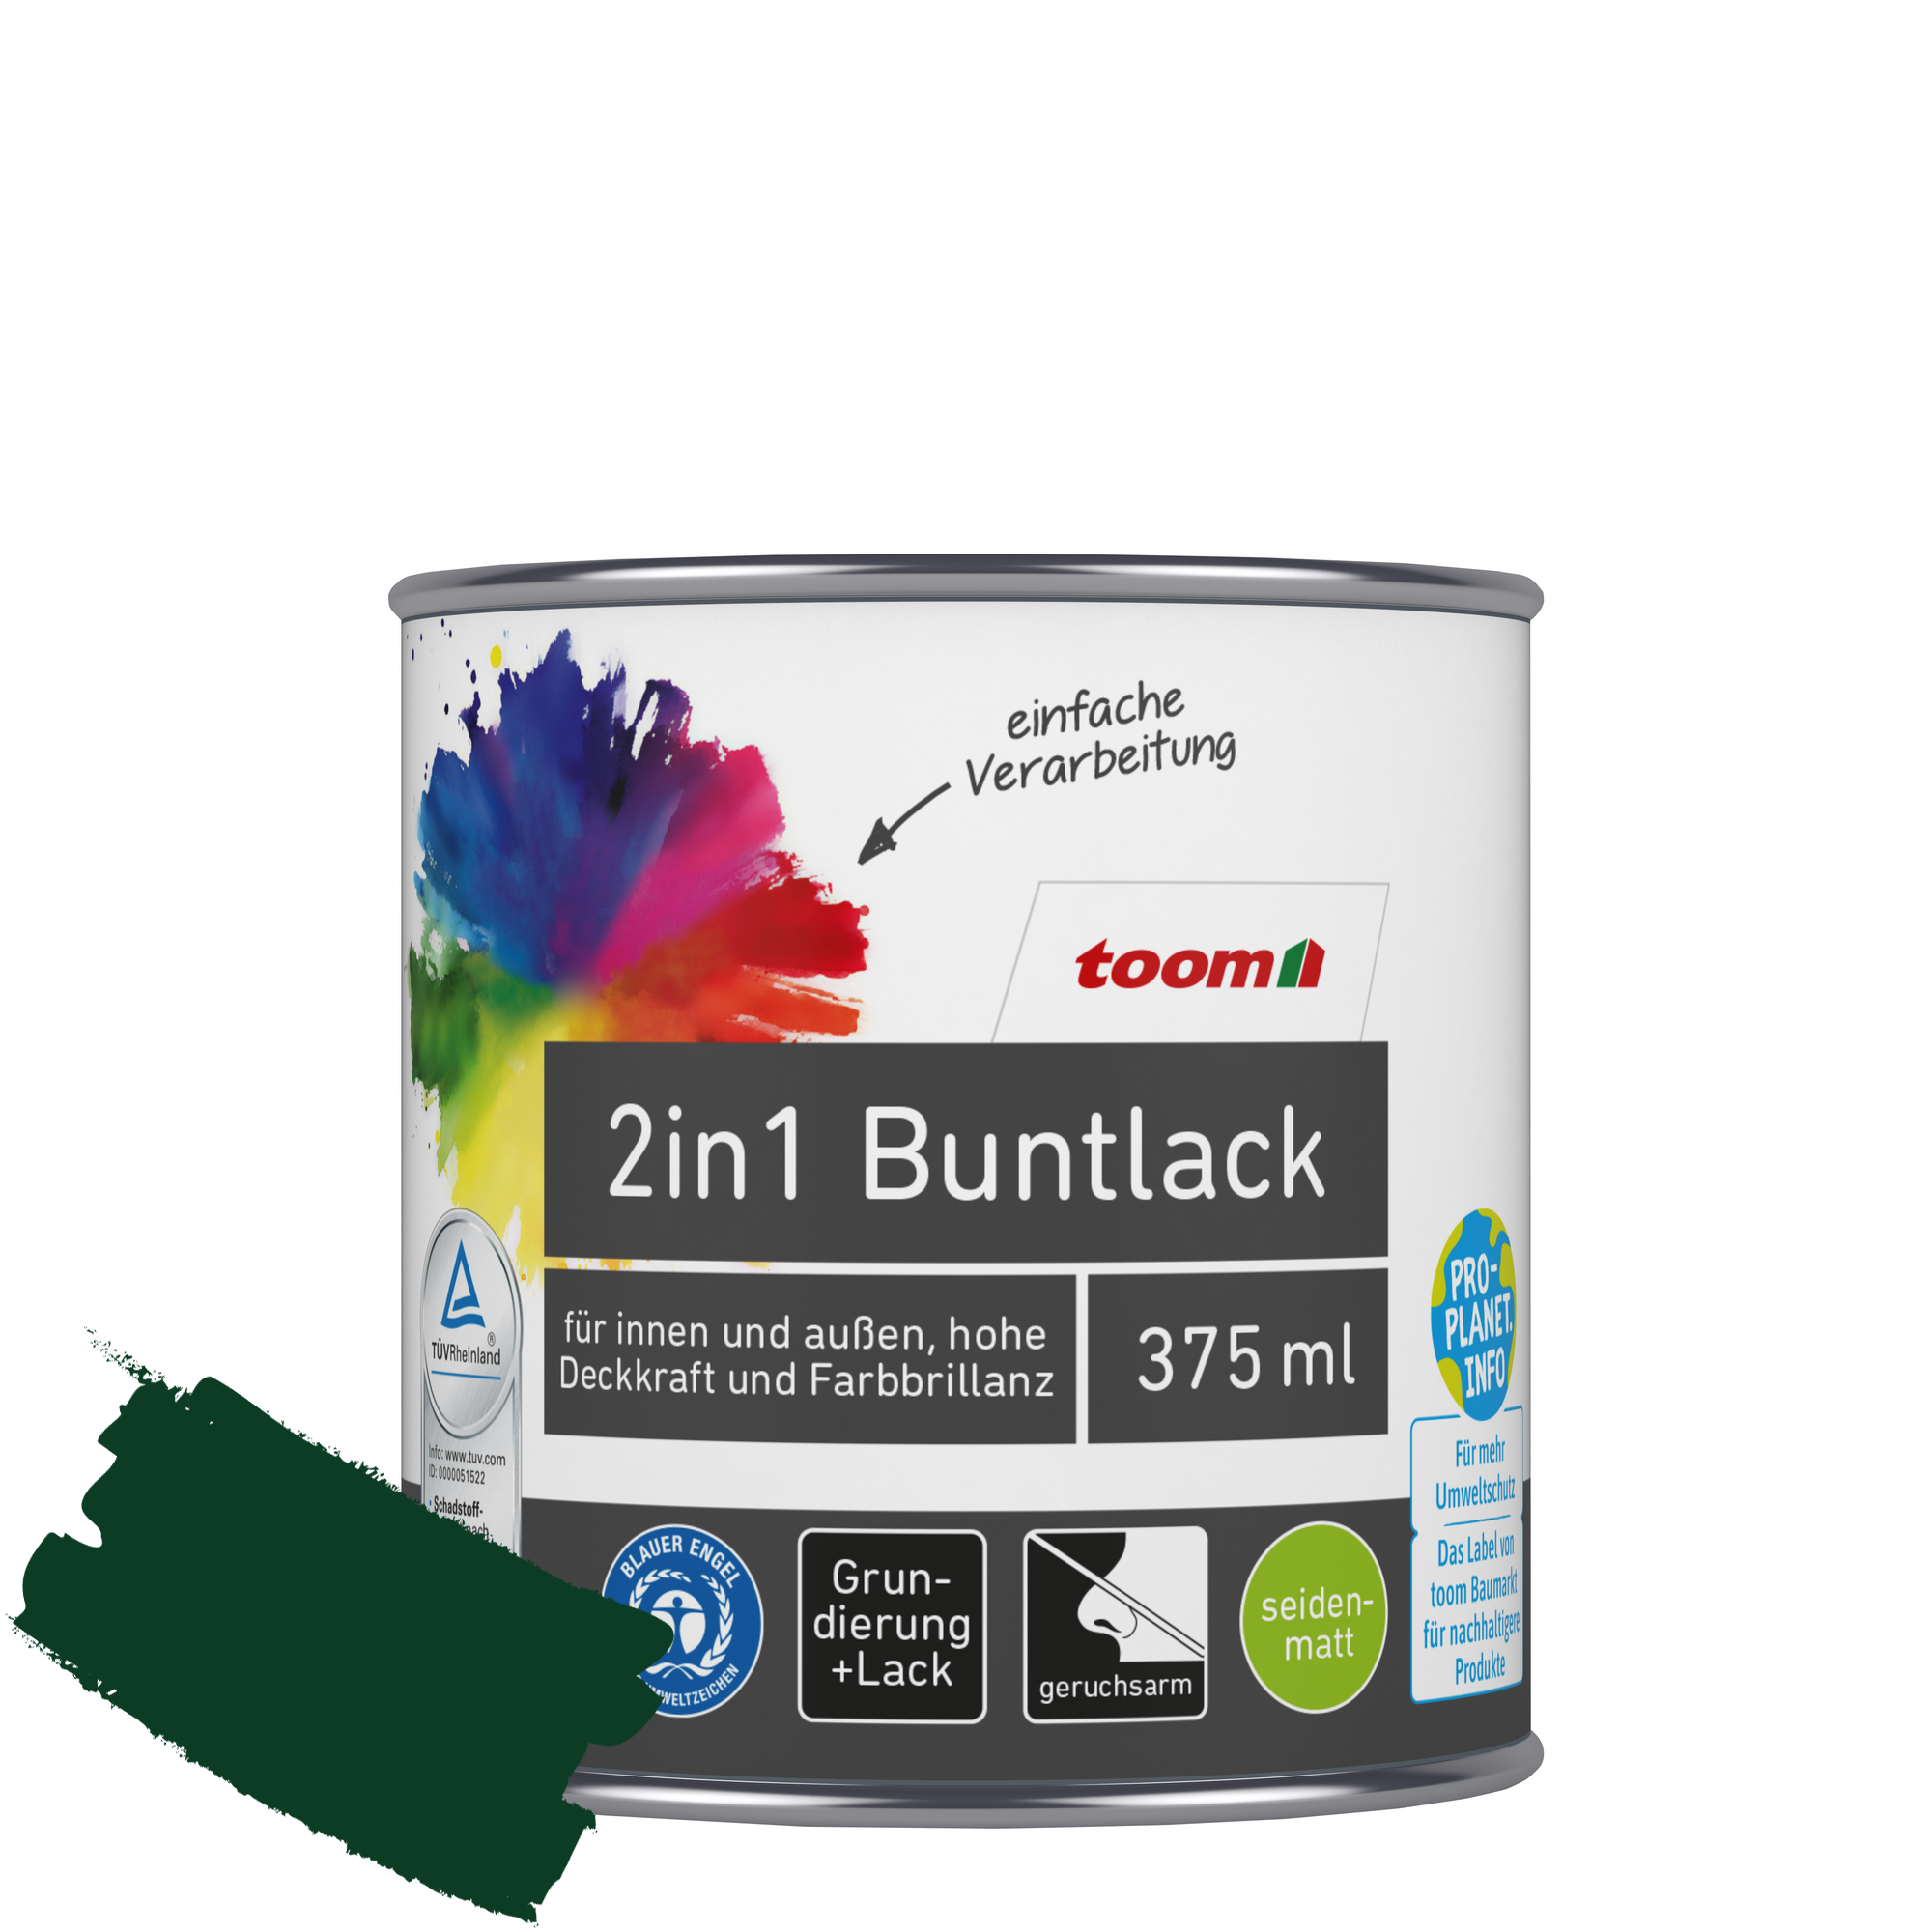 2in1 Buntlack 'Morgentau' moosgrün seidenmatt 375 ml + product picture